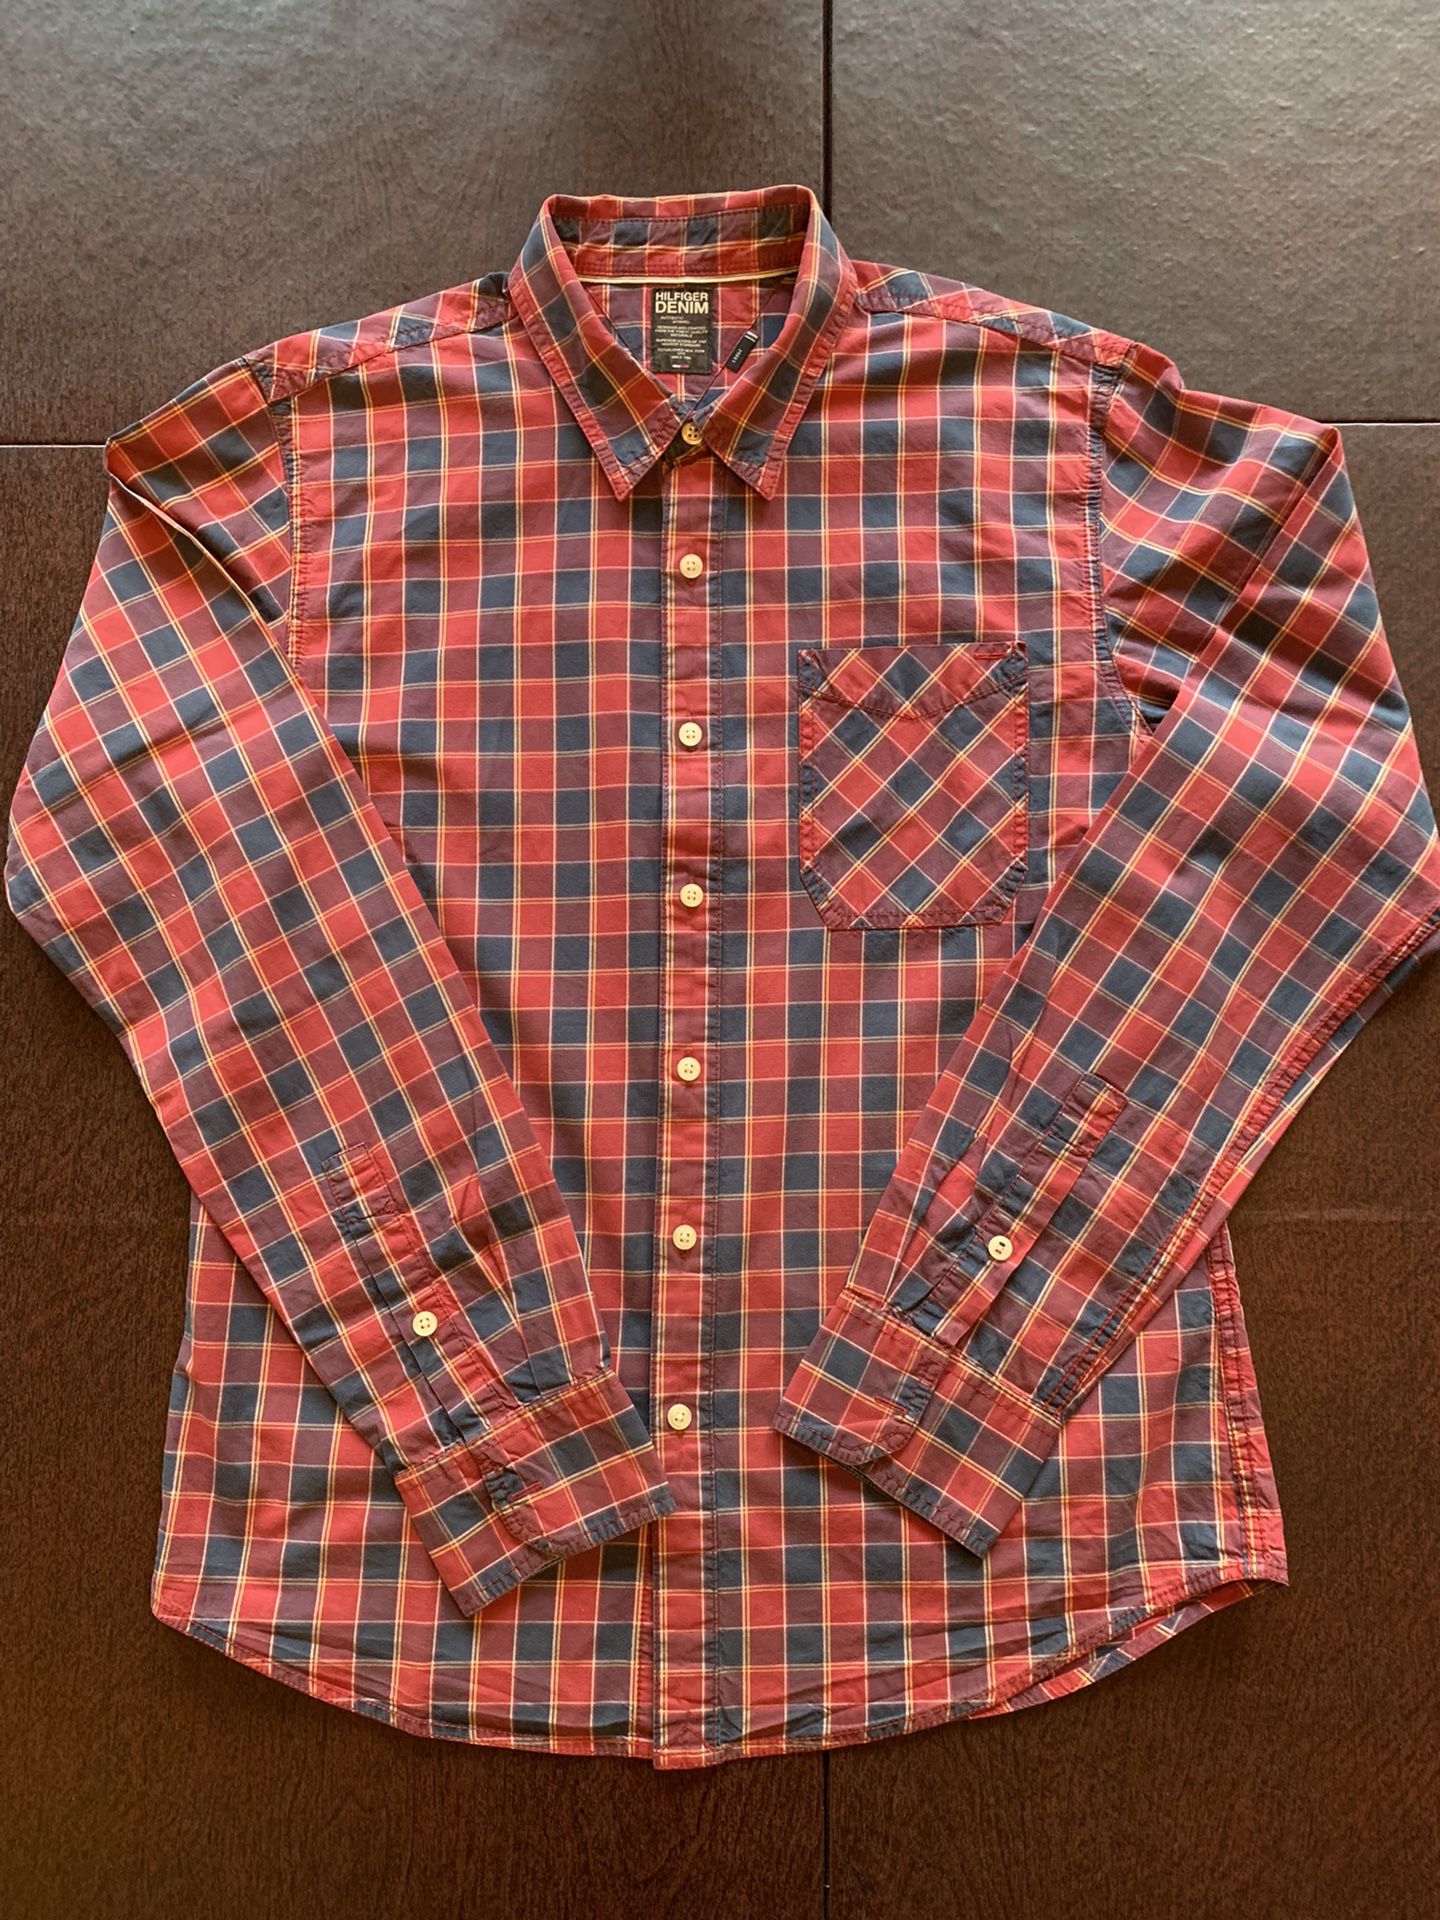  Tommy Hilfiger Denim Plaid Navy Red Long Sleeve Button Up Shirt - Men’s Size L